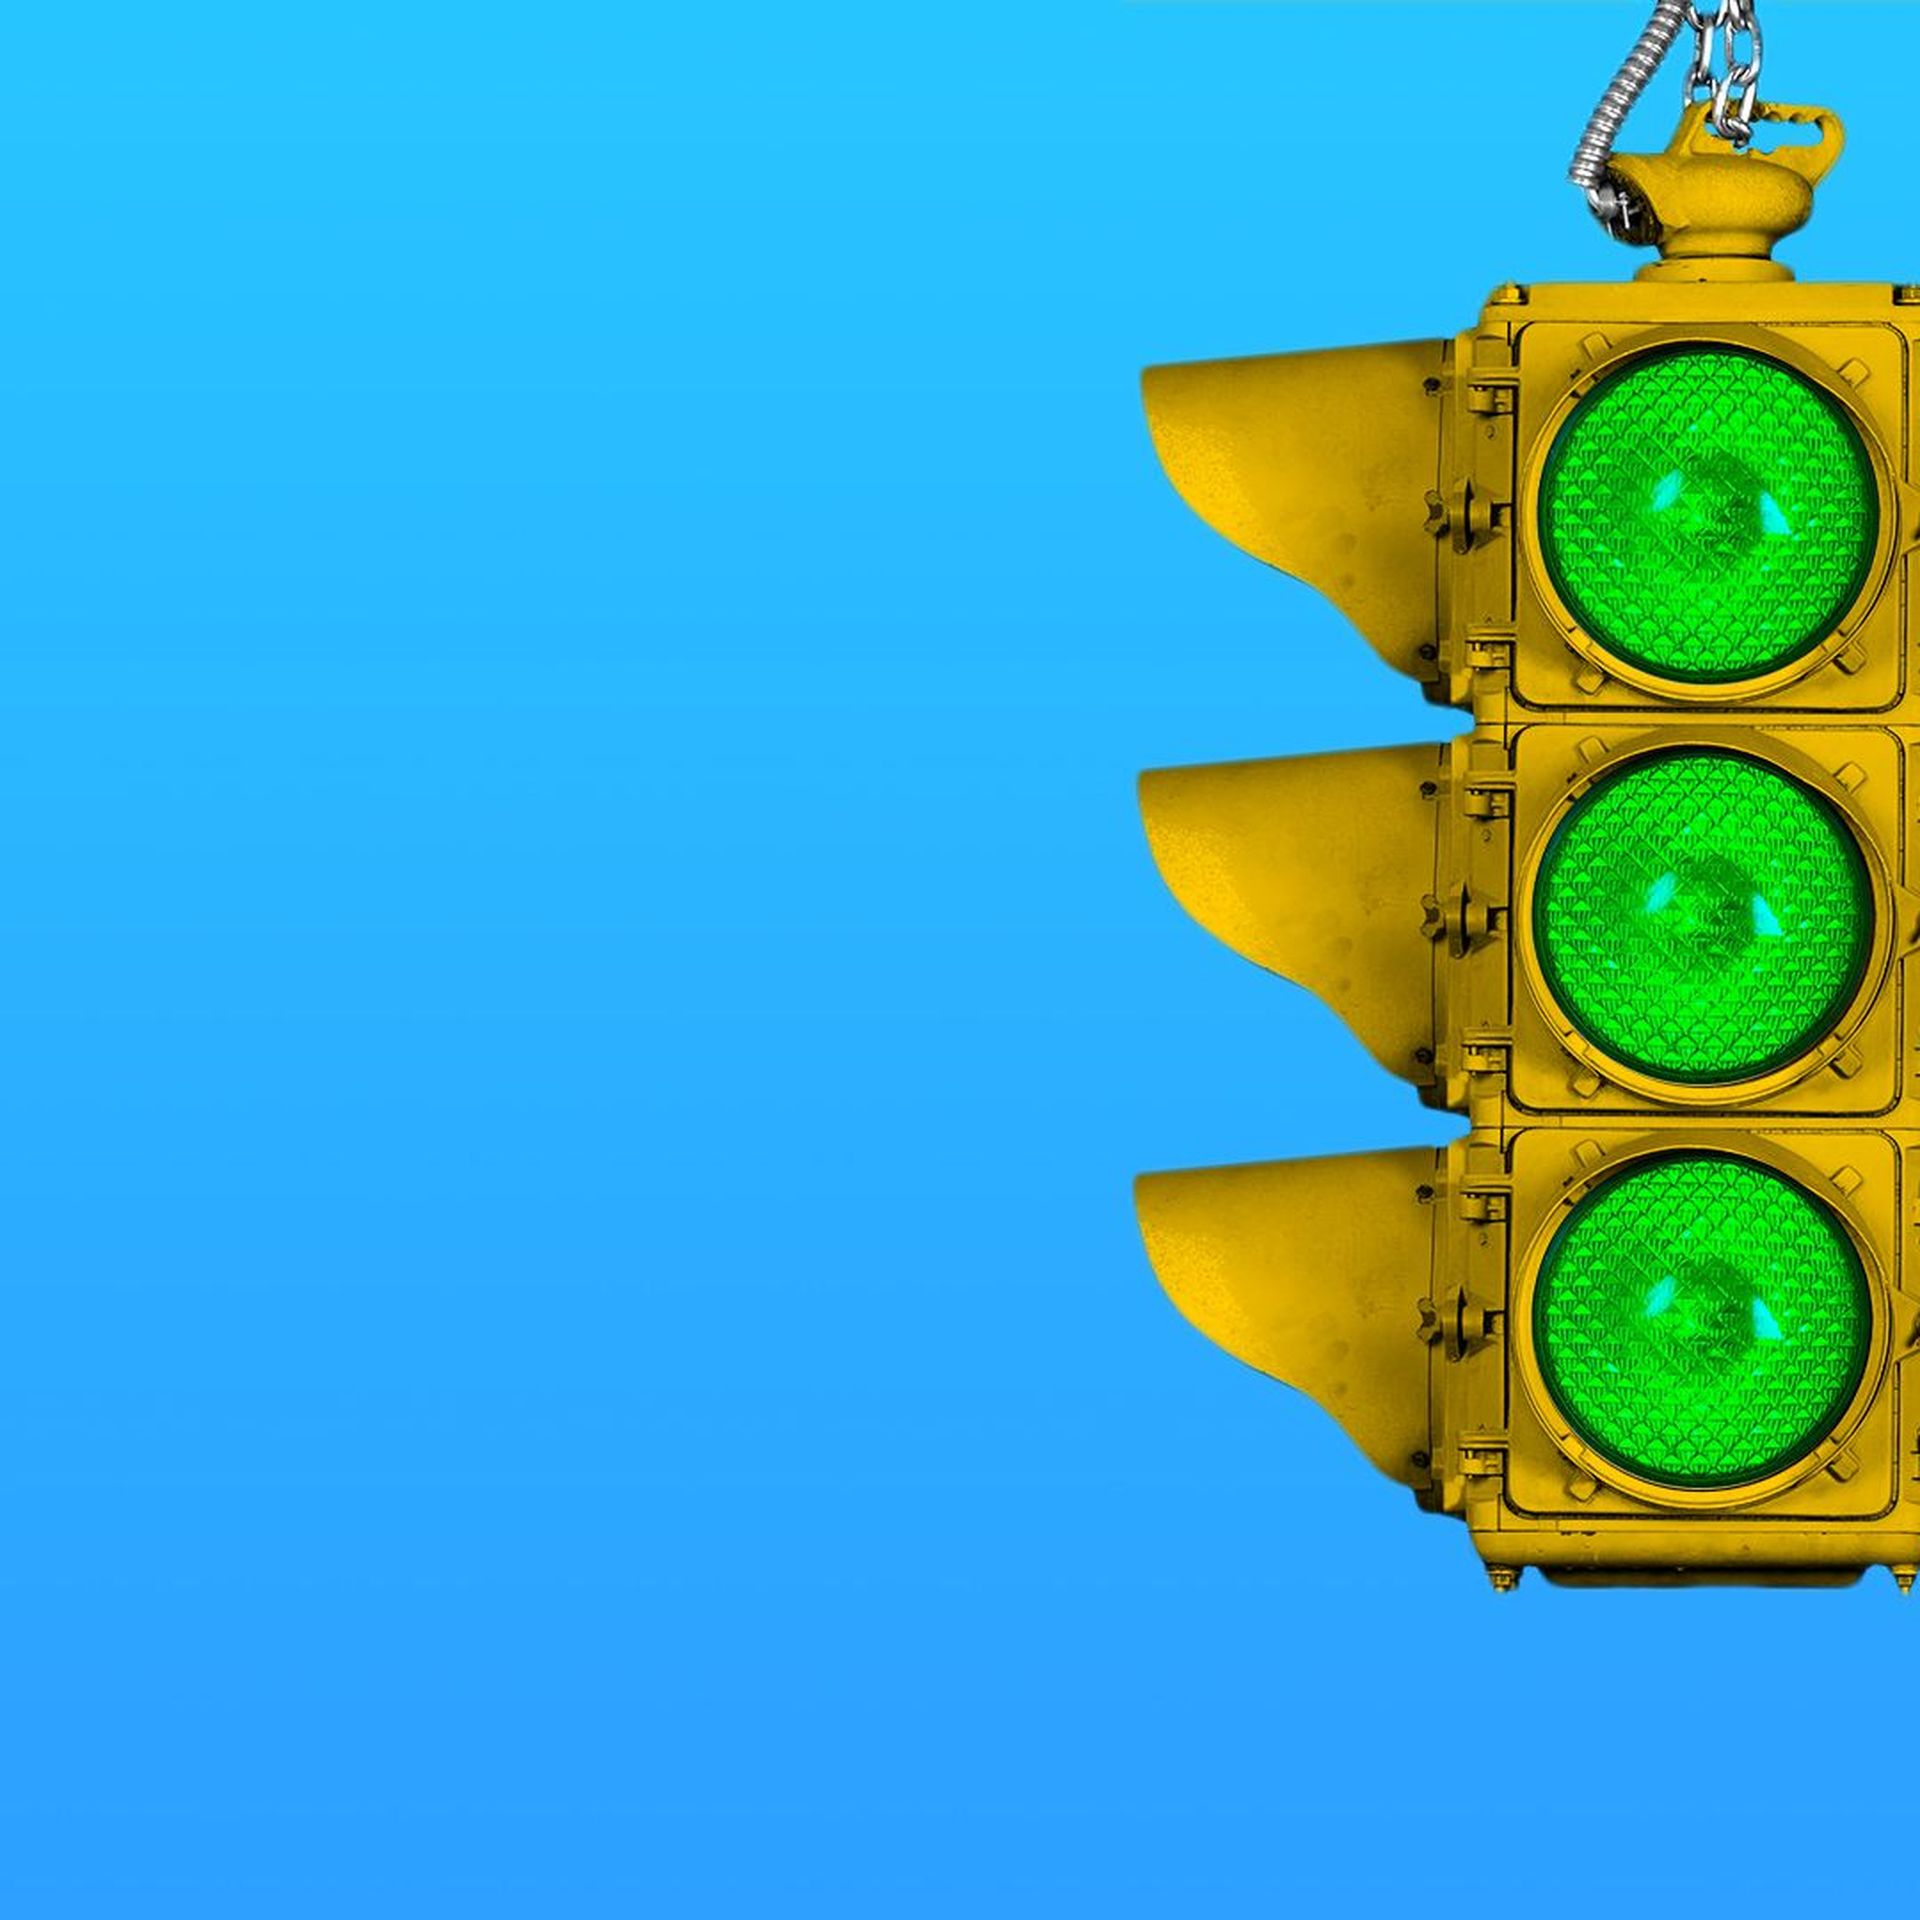 Illustration of a traffic light with three green lights.